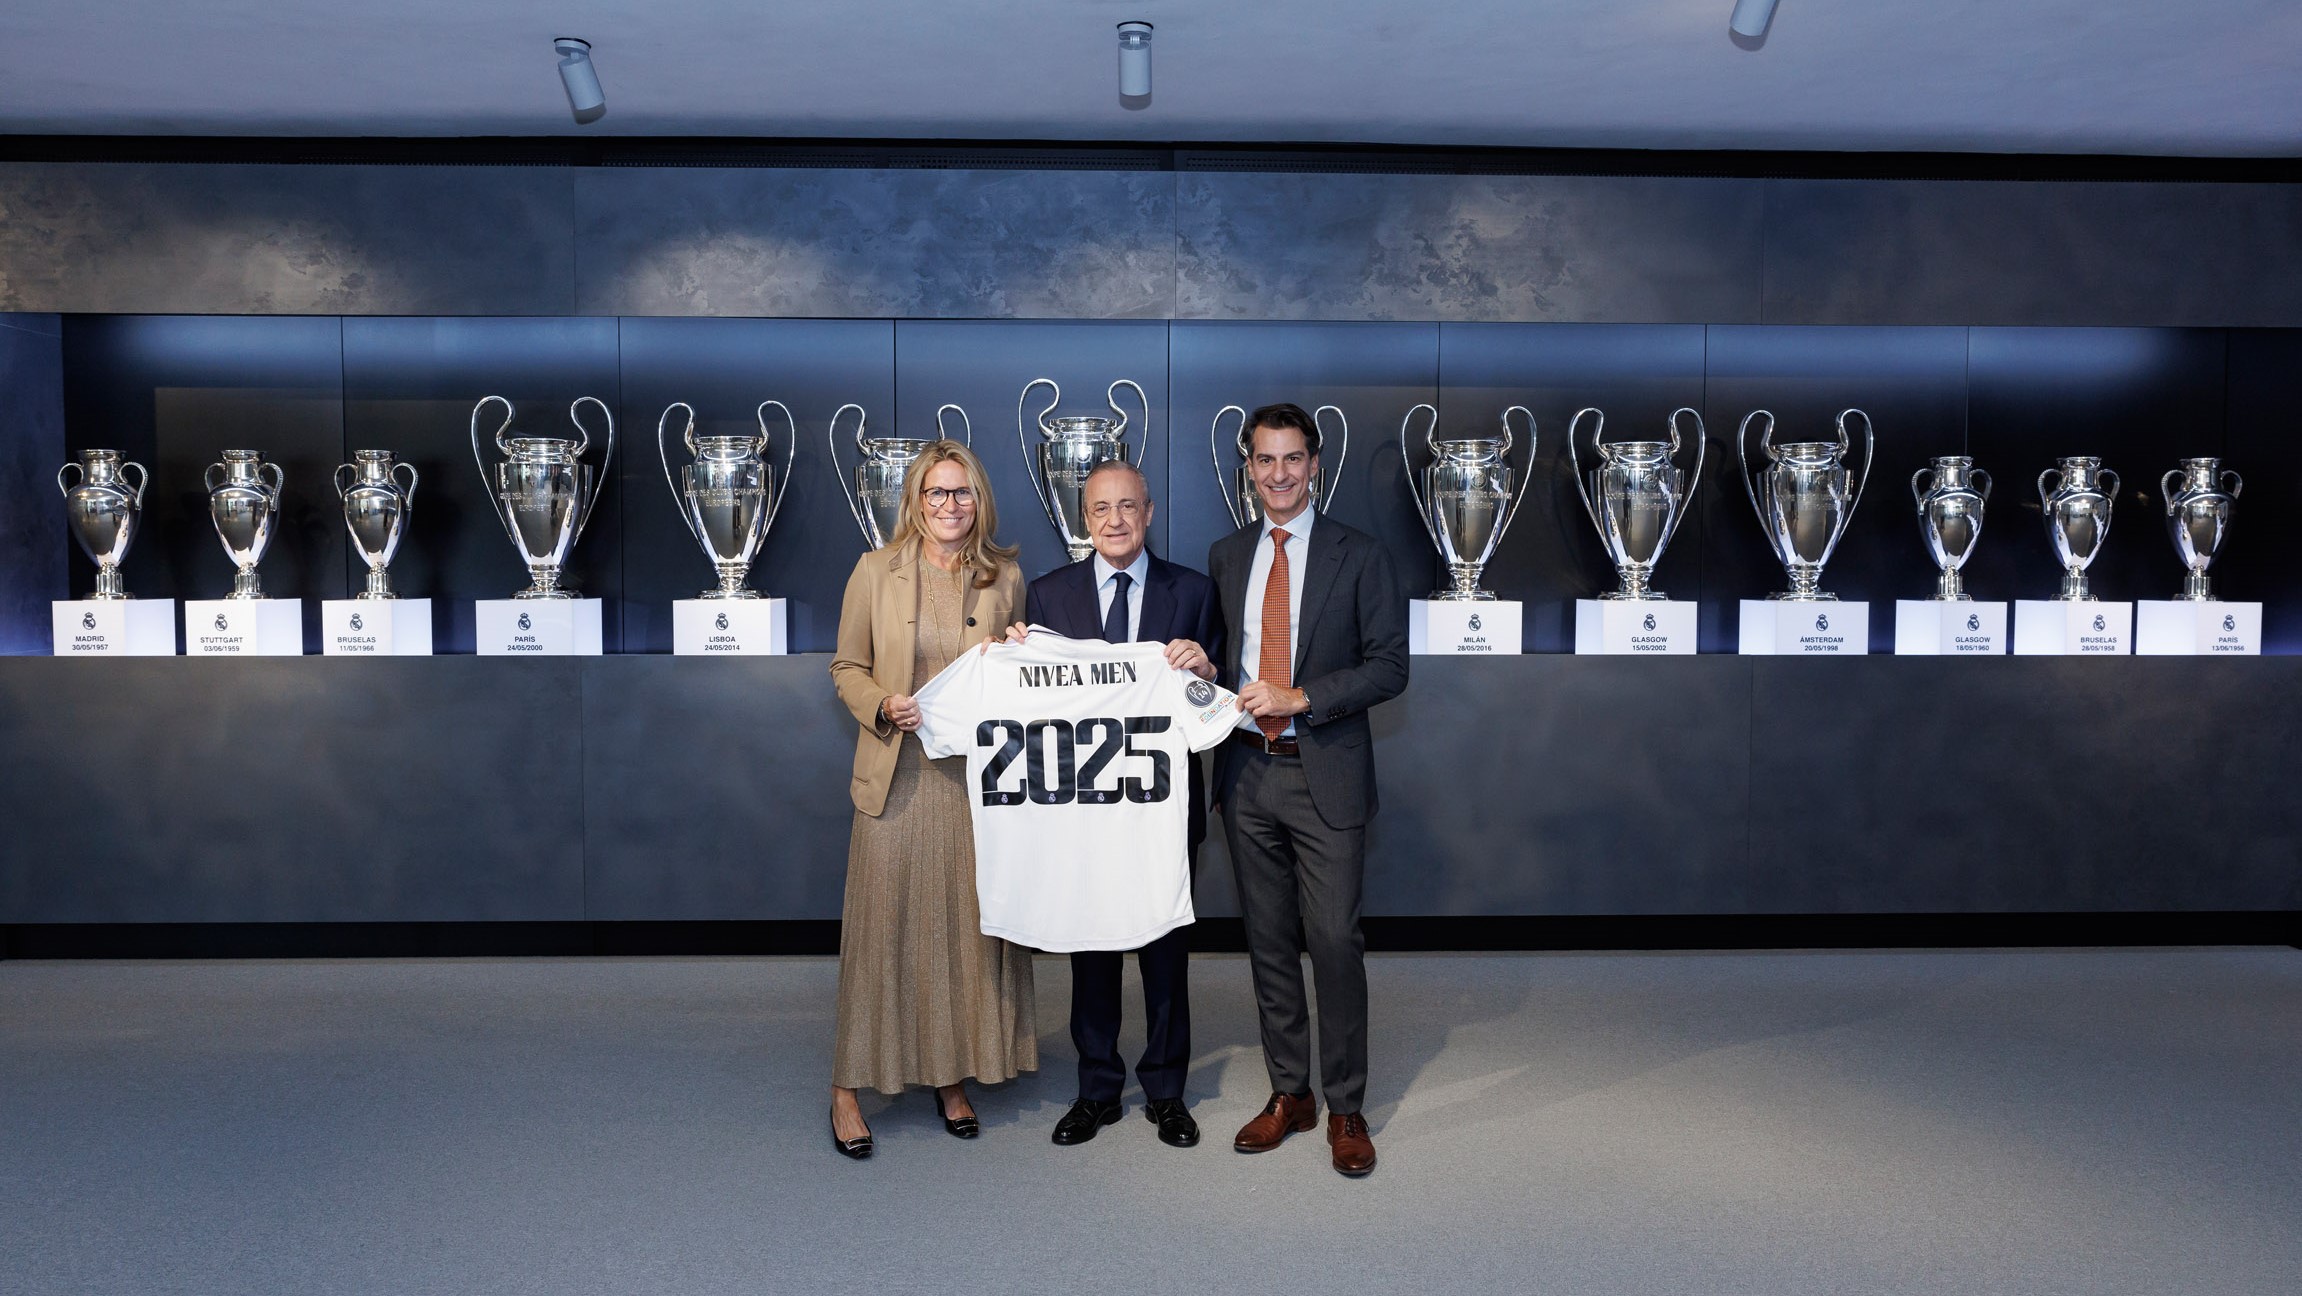 Grita Loebsack, Prsidentin Nivea, Florentino Prez, Prsident Real Madrid, und Oswald Barckhahn, Vorstandsmitglied bei Beiersdorf (v.l.n.r.) - Quelle: Beiersdorf AG